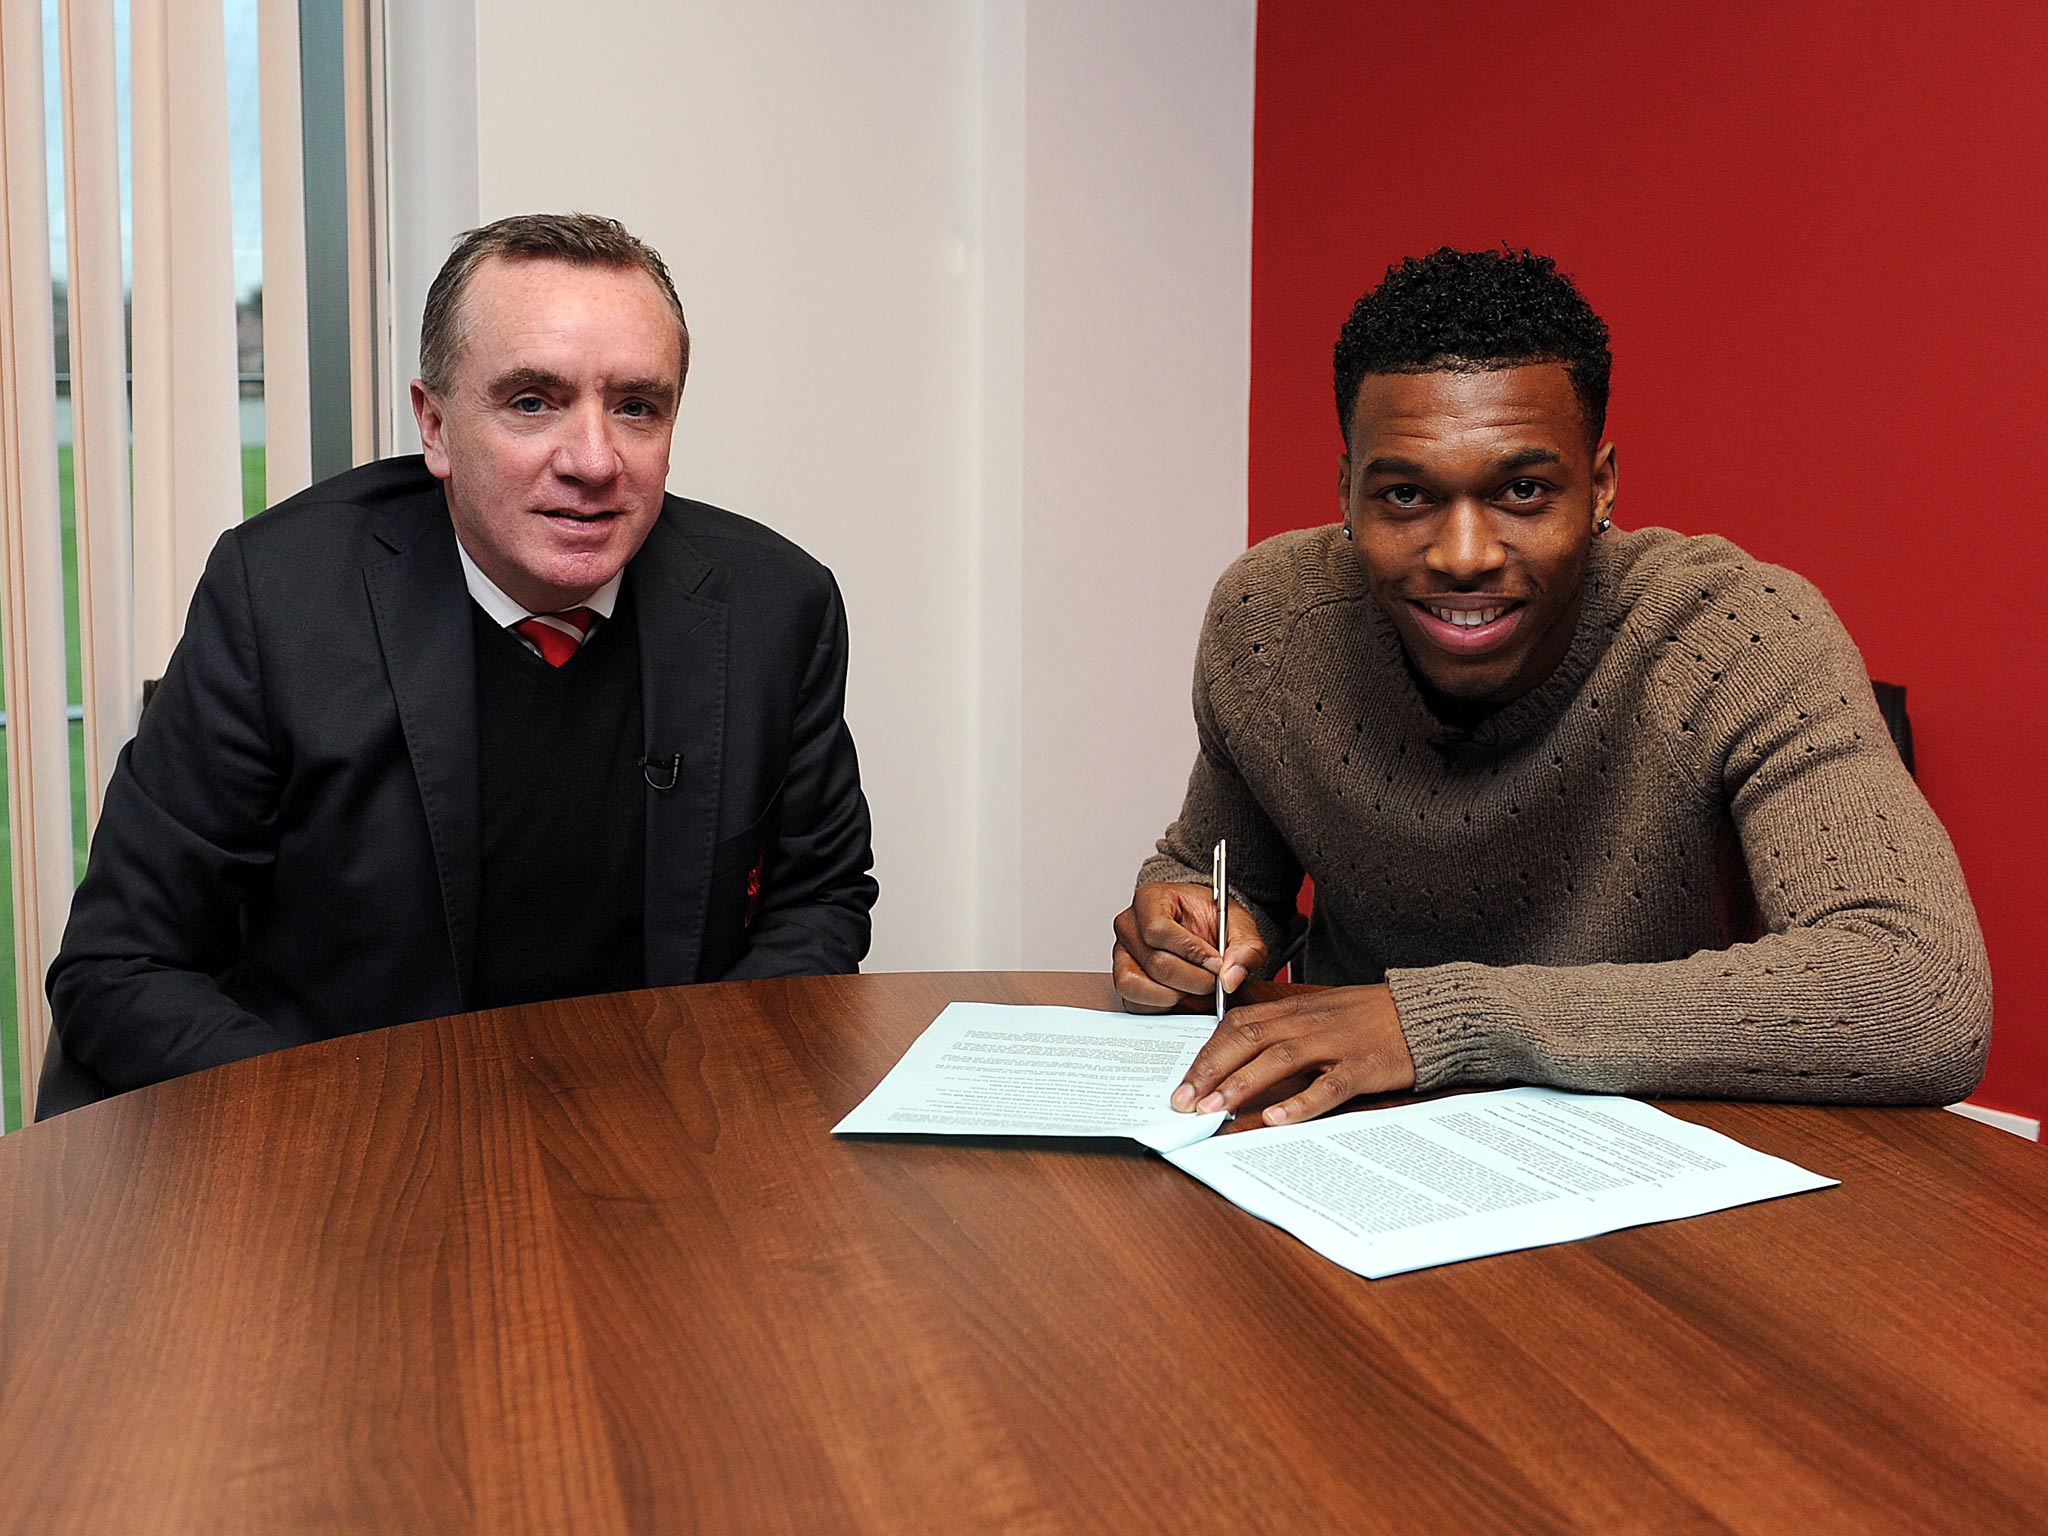 Daniel Sturridge signs his Liverpool contract